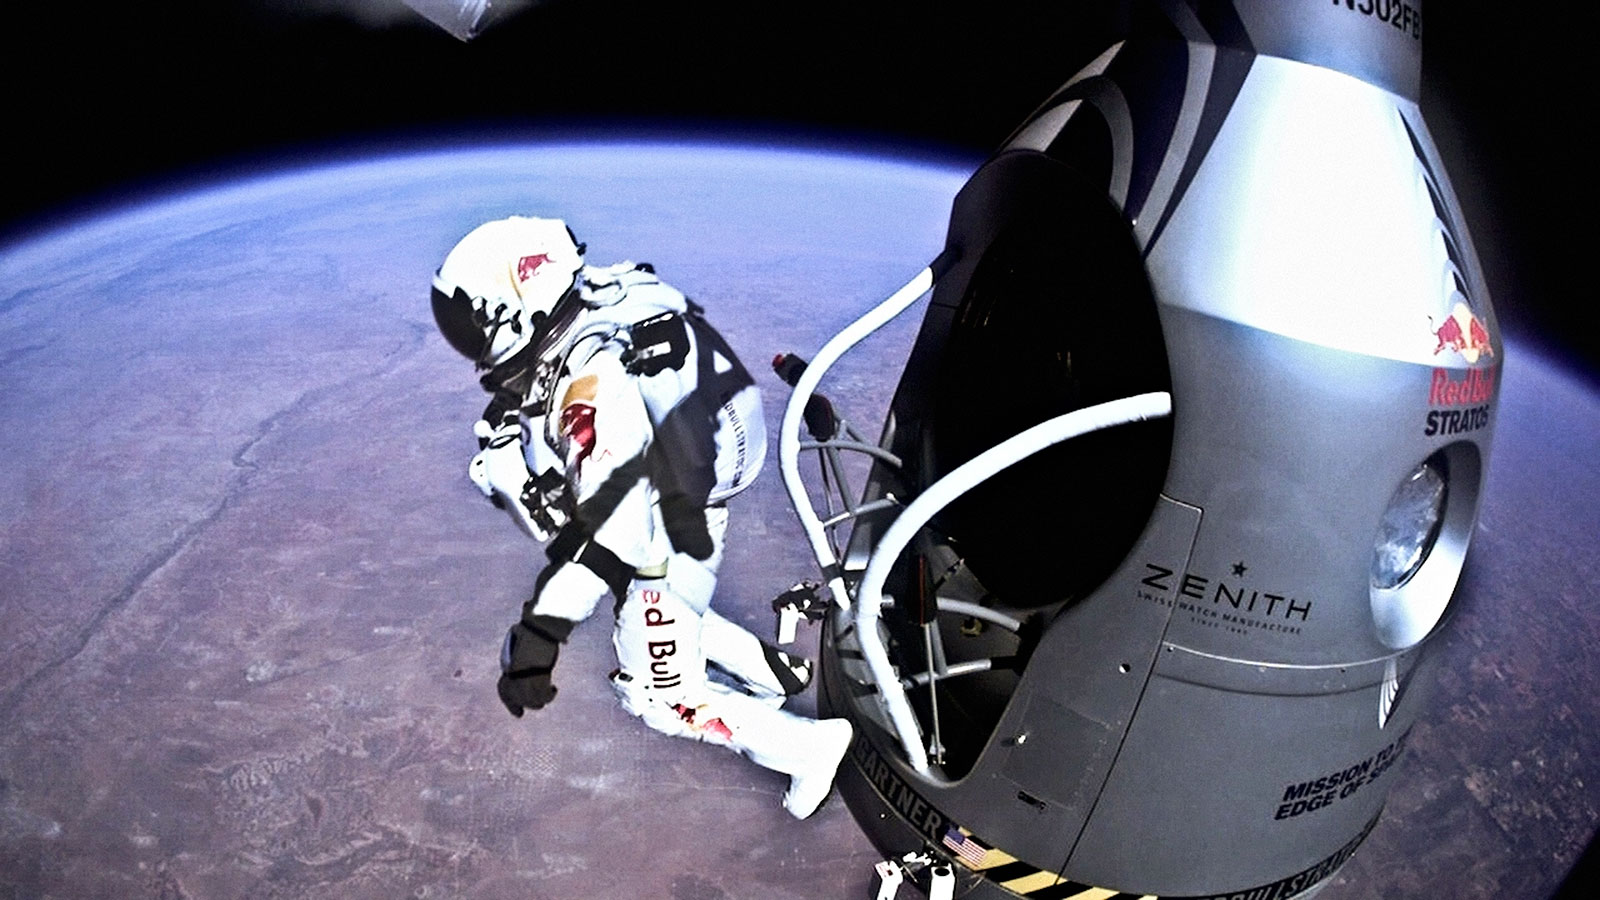 Felix Baumgartner freefalls 24 miles into the stratosphere. 2012